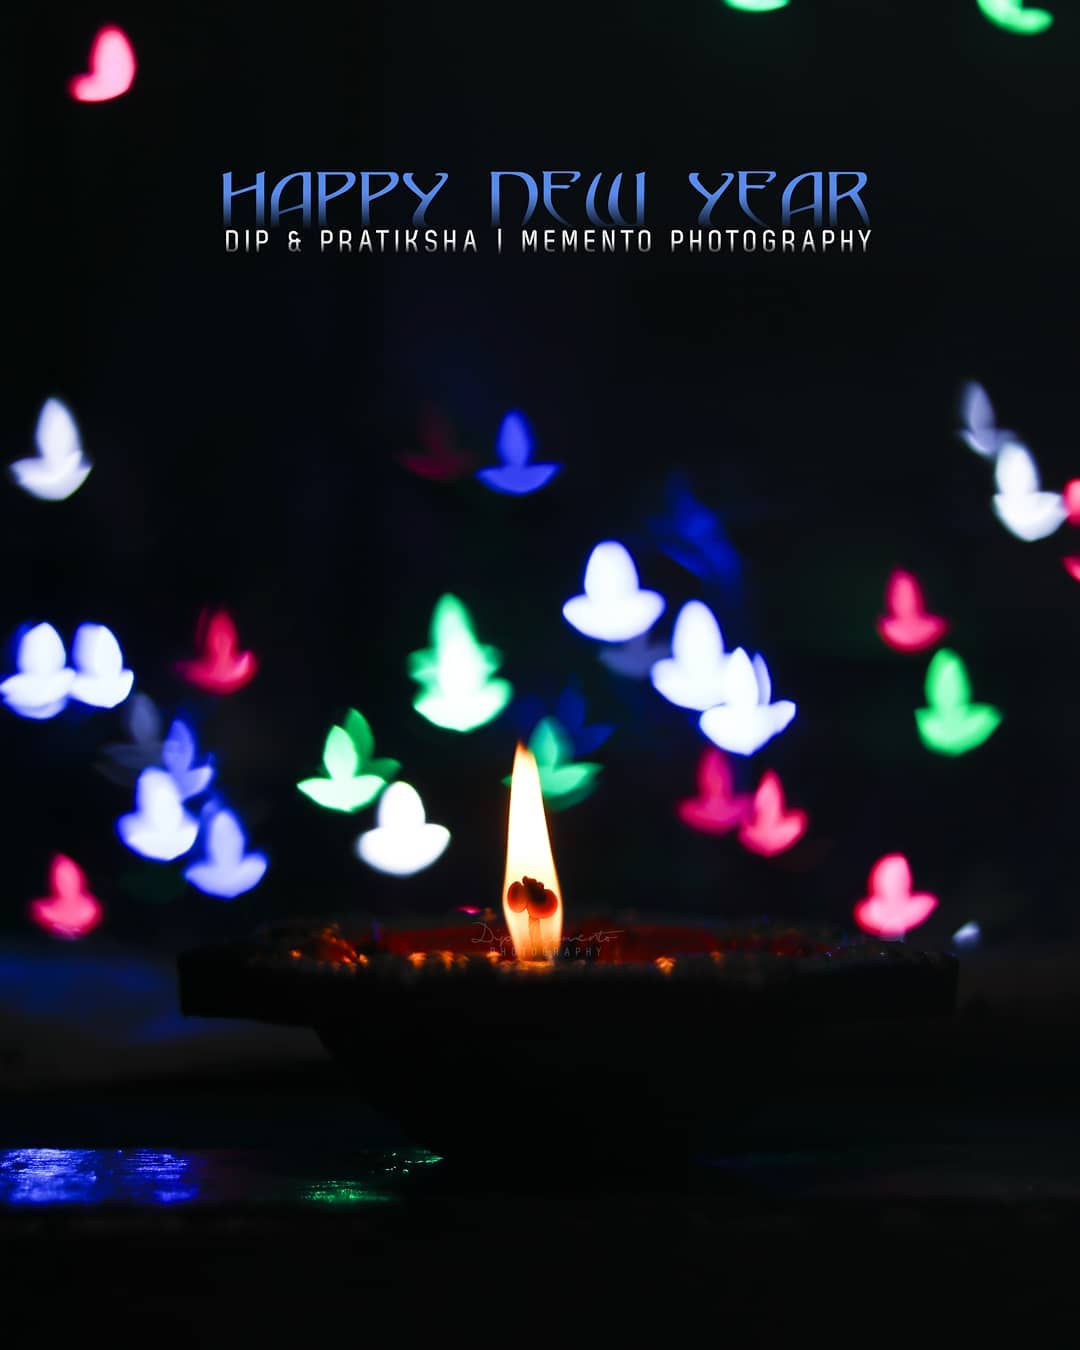 Happy New Year.

#newyear #newyearvibes #happiness #prosperity #joy #joyfull #newday #newresolutions #resolution #indianfestival #indianbigfestival #festivalofdiyas #diya #festivaloflights #festival #crackles #fireworks

@photographers.of.india @colours.of.india @dslrofficial @india_undiscovered @__indian_photography__ @photographers_of_india @hindustan.pictures @the.anonymous.photographers @india_everyday @canon_photos @indian.hobbygraphy @india_gram @adobe @streetphotofactory @phodus_competition @dpeginsta @igindiaview @igvisualcaptures @indian_clickers_ @indianshutterbugs @indiashutterbugs @galiphotography_ @photofieteam @delhiwale @travel.real.india @monochromeindia @naturephotography.india @photofieteam @cloud_ig @indiaview @delhihai @india.clicks @official_photography_hub @trellingdelhi @agameoftones @photographers__of__india @lonelyplanetindia @imperial.india @click.ig @dslr_photographers @talent_wall @jmu_talent_destination @natgeocreative @creativeimagemagazineo @iop_delhi @photo_pond @talent_of_india @talent_wall #9924227745 #dipmementophotography #dip_memento_photography